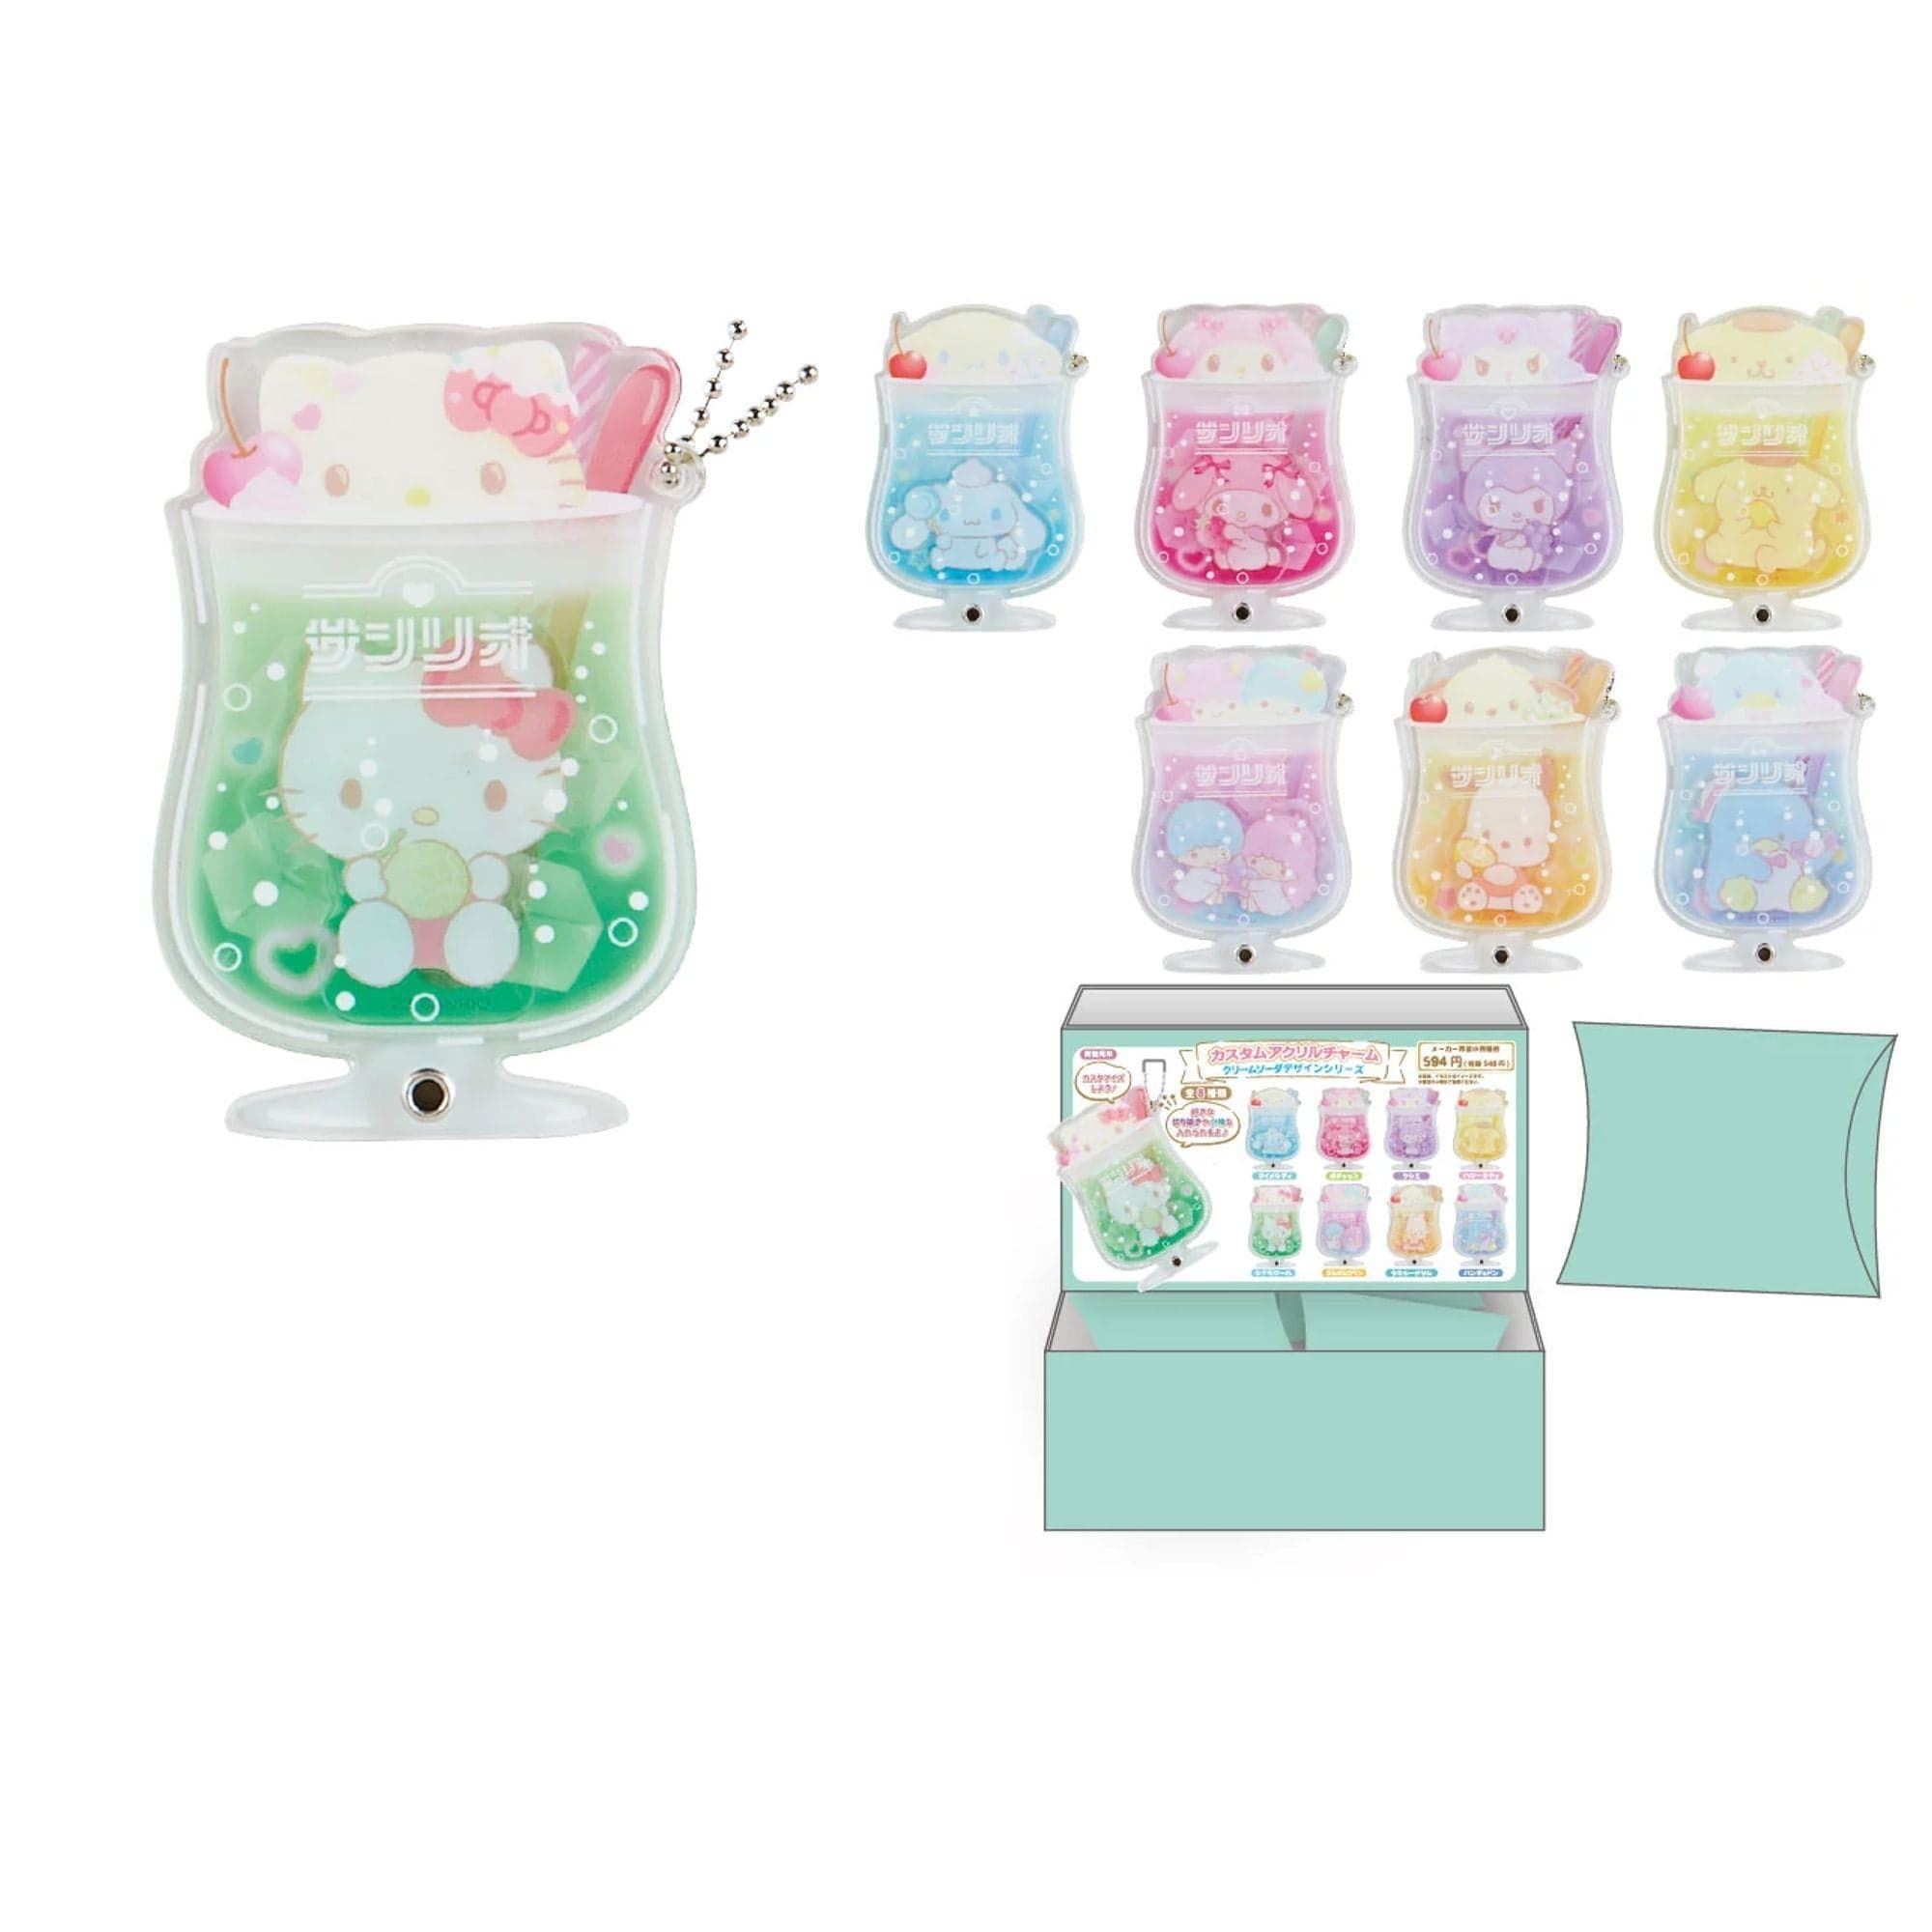 Enesco Sanrio Soda Floats Surprise Acrylic Charm Kawaii Gifts 4550337007655